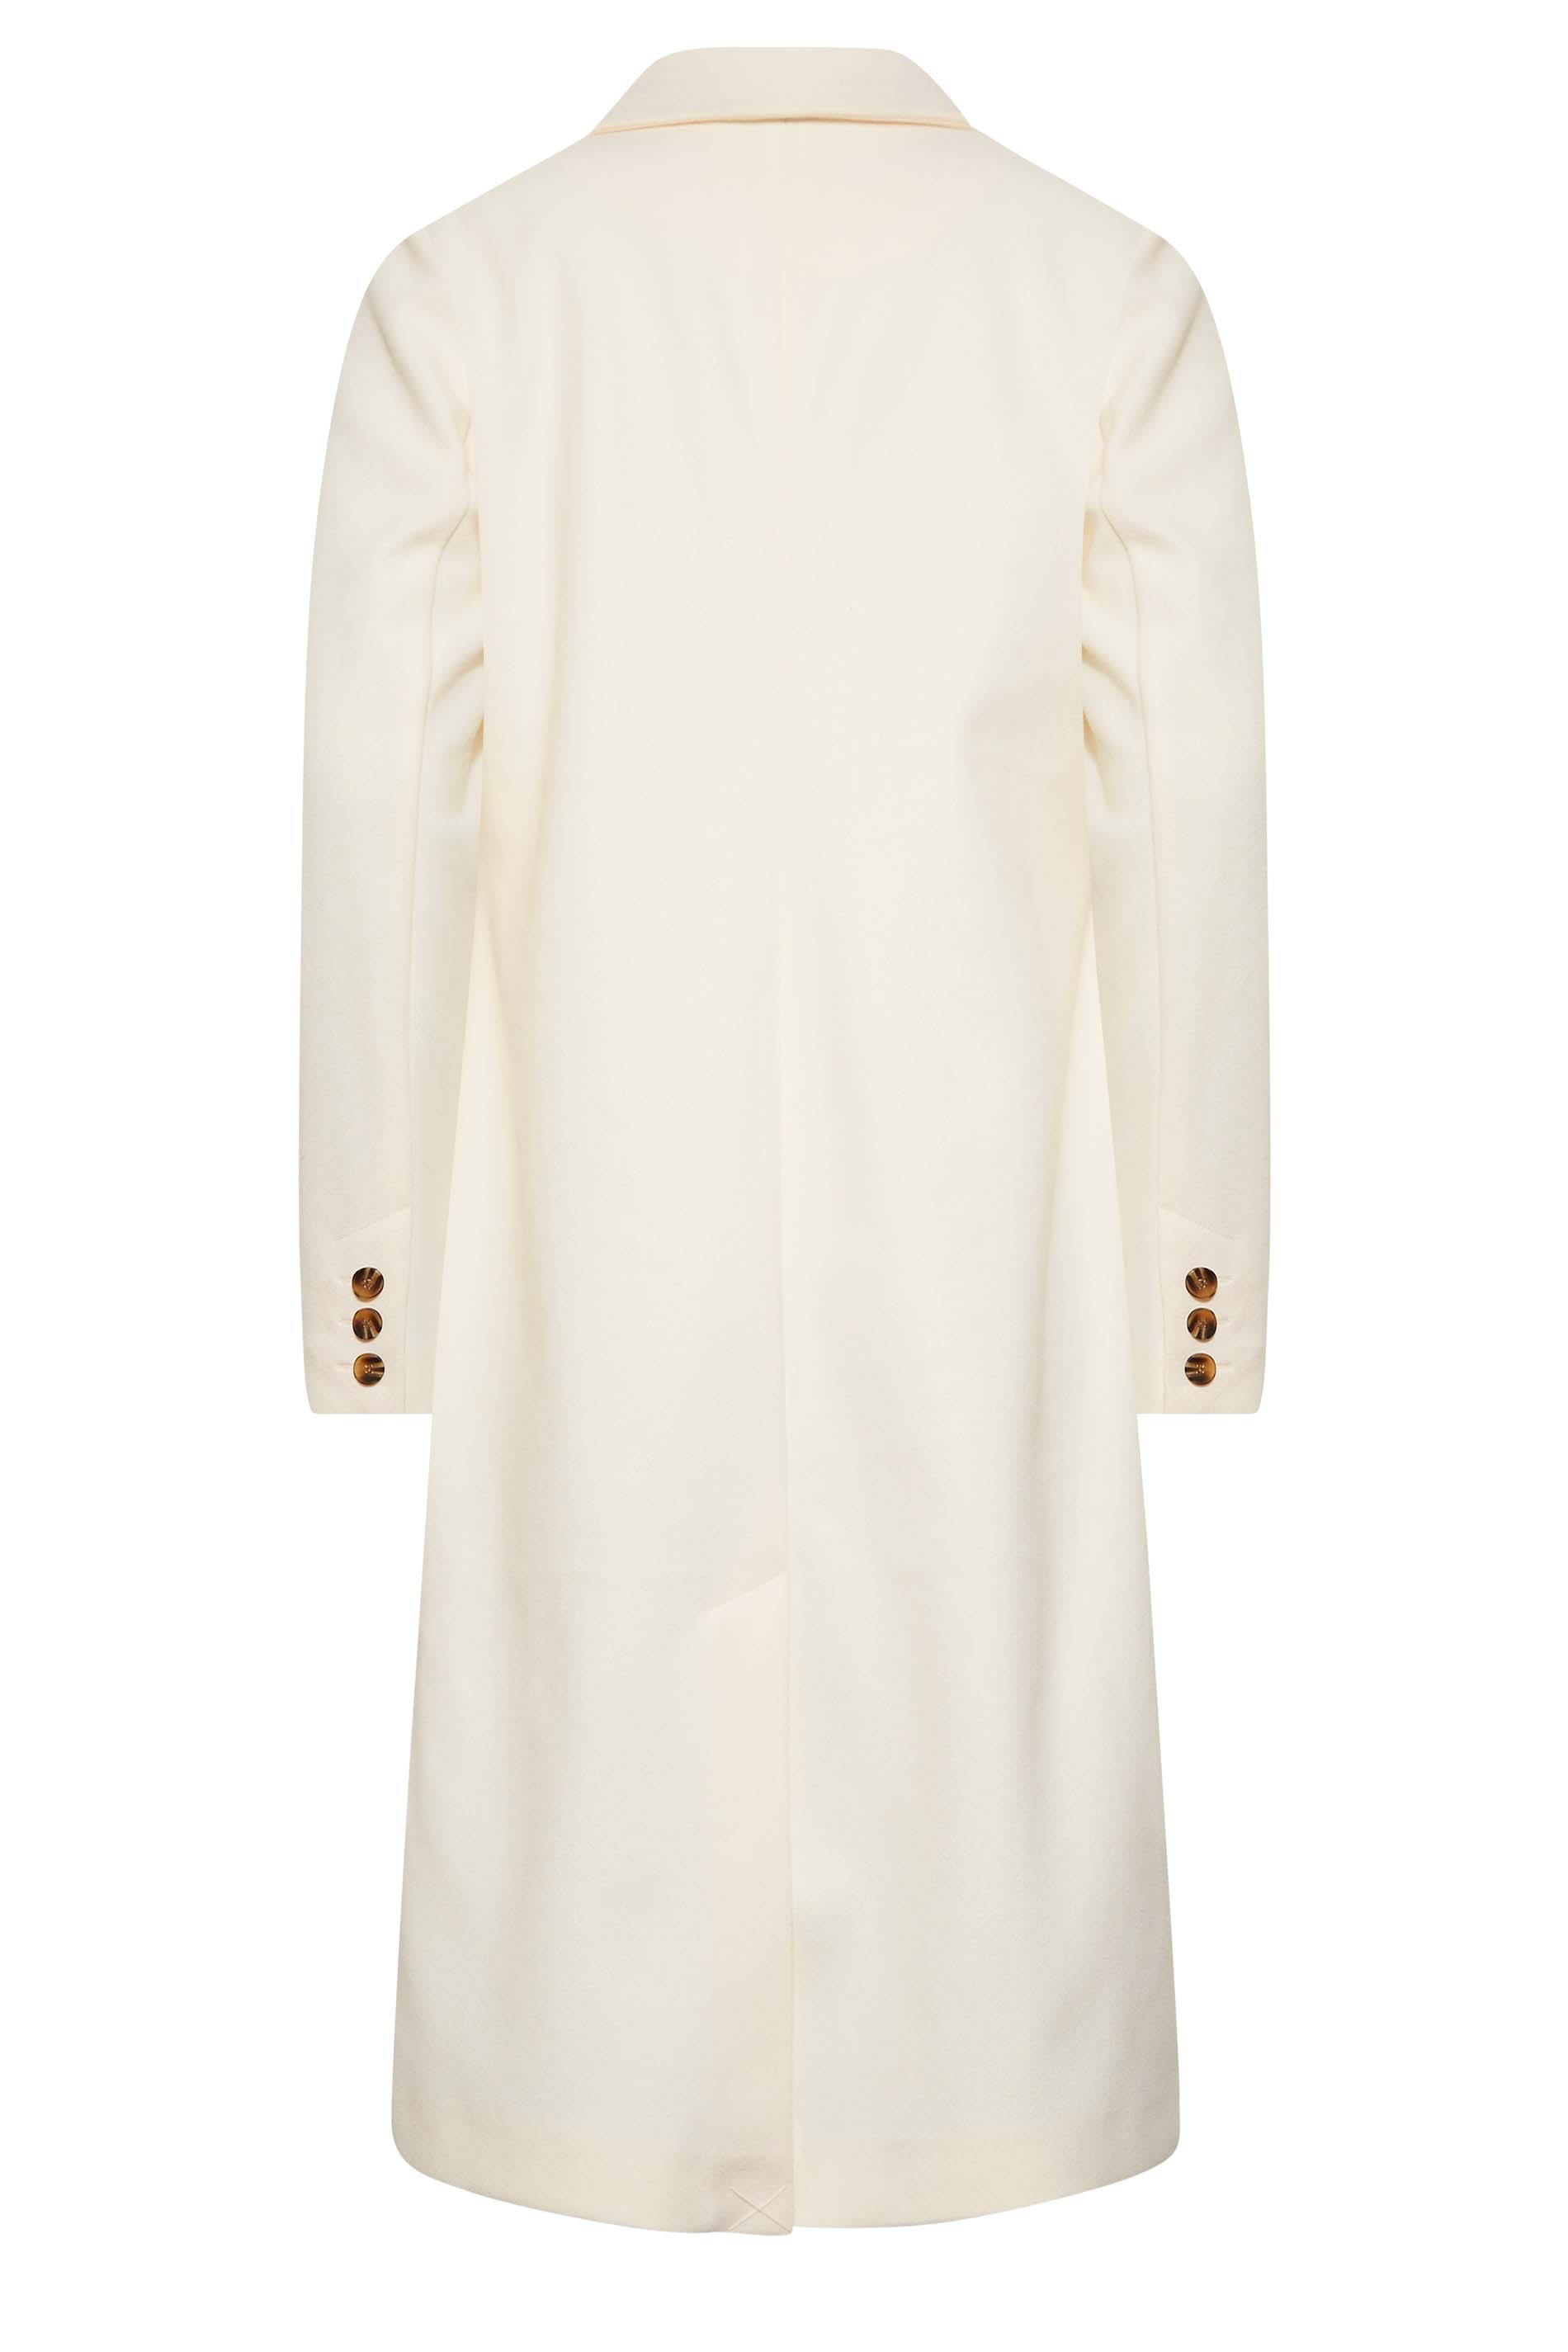 LTS Tall Women's Ivory White Midi Formal Coat | Long Tall Sally 3